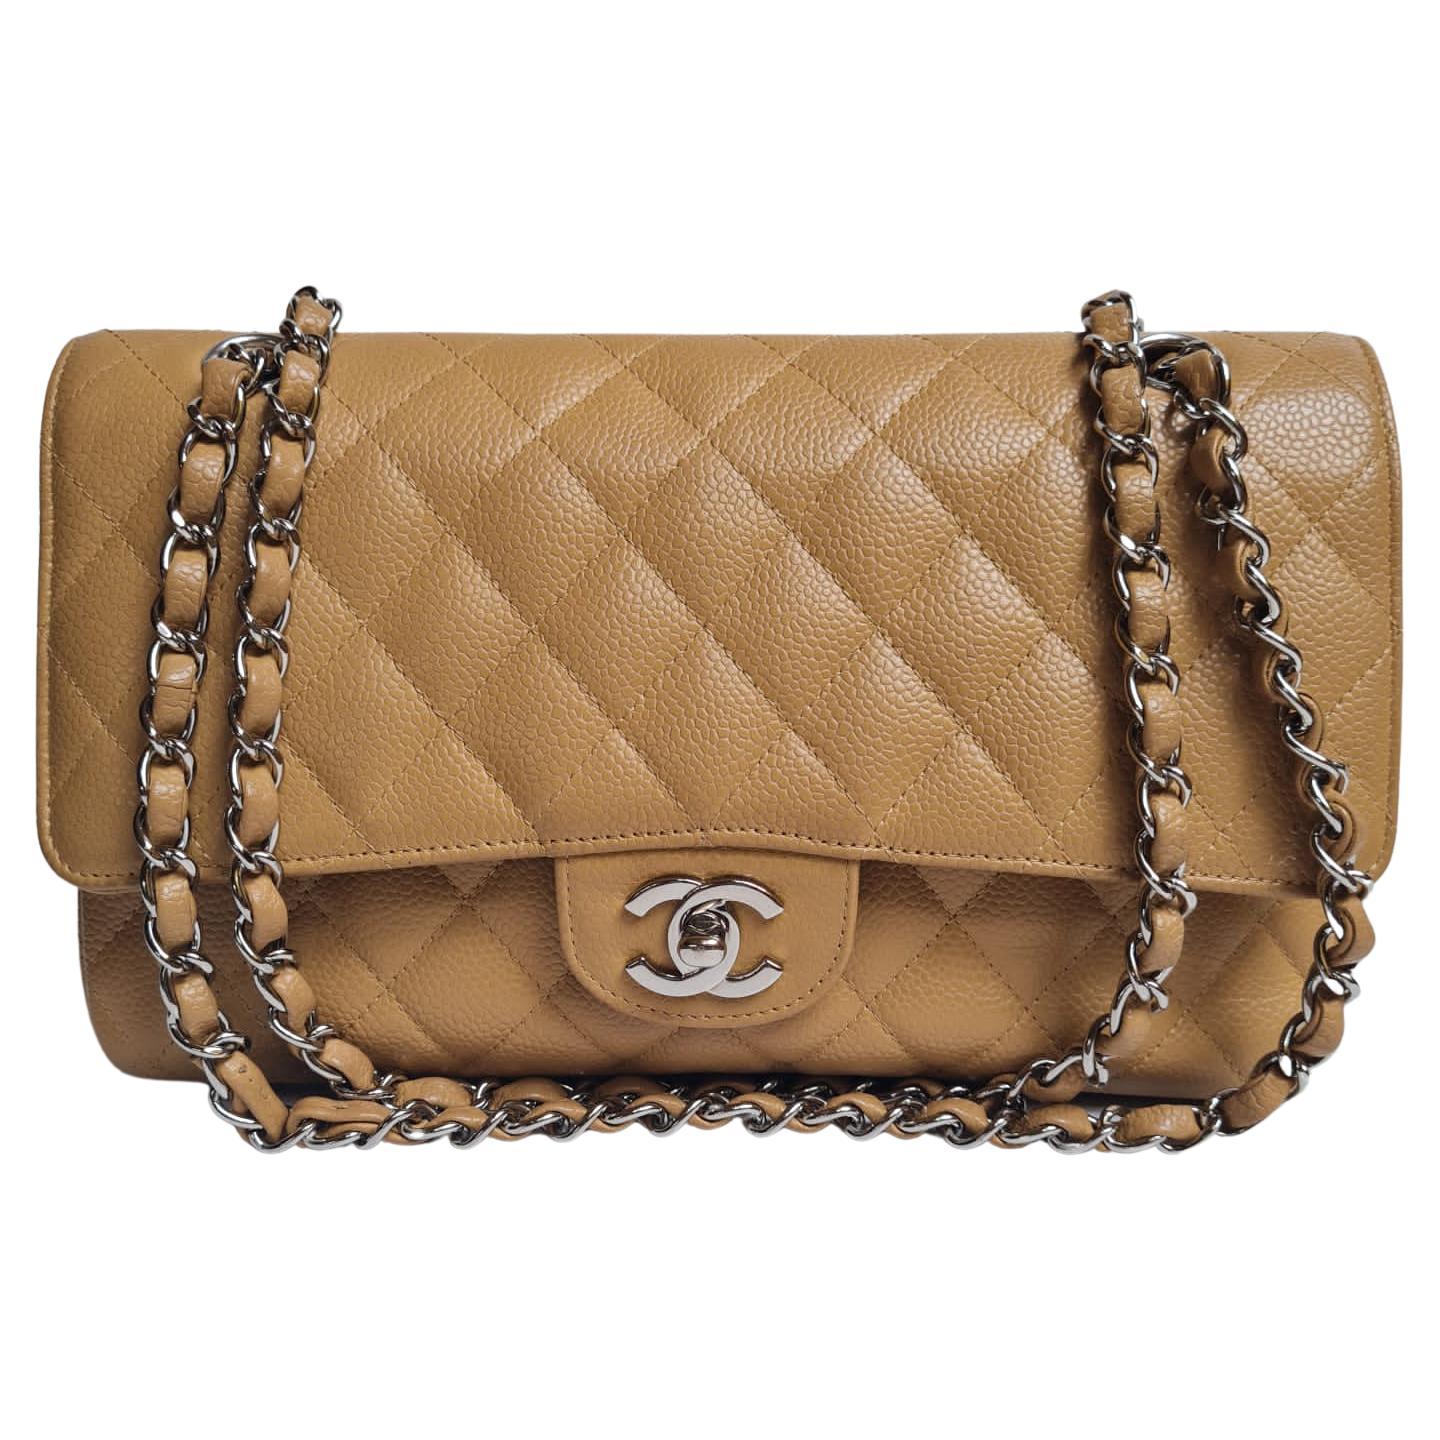 Chanel Camel Caviar Leather Double Flap Bag